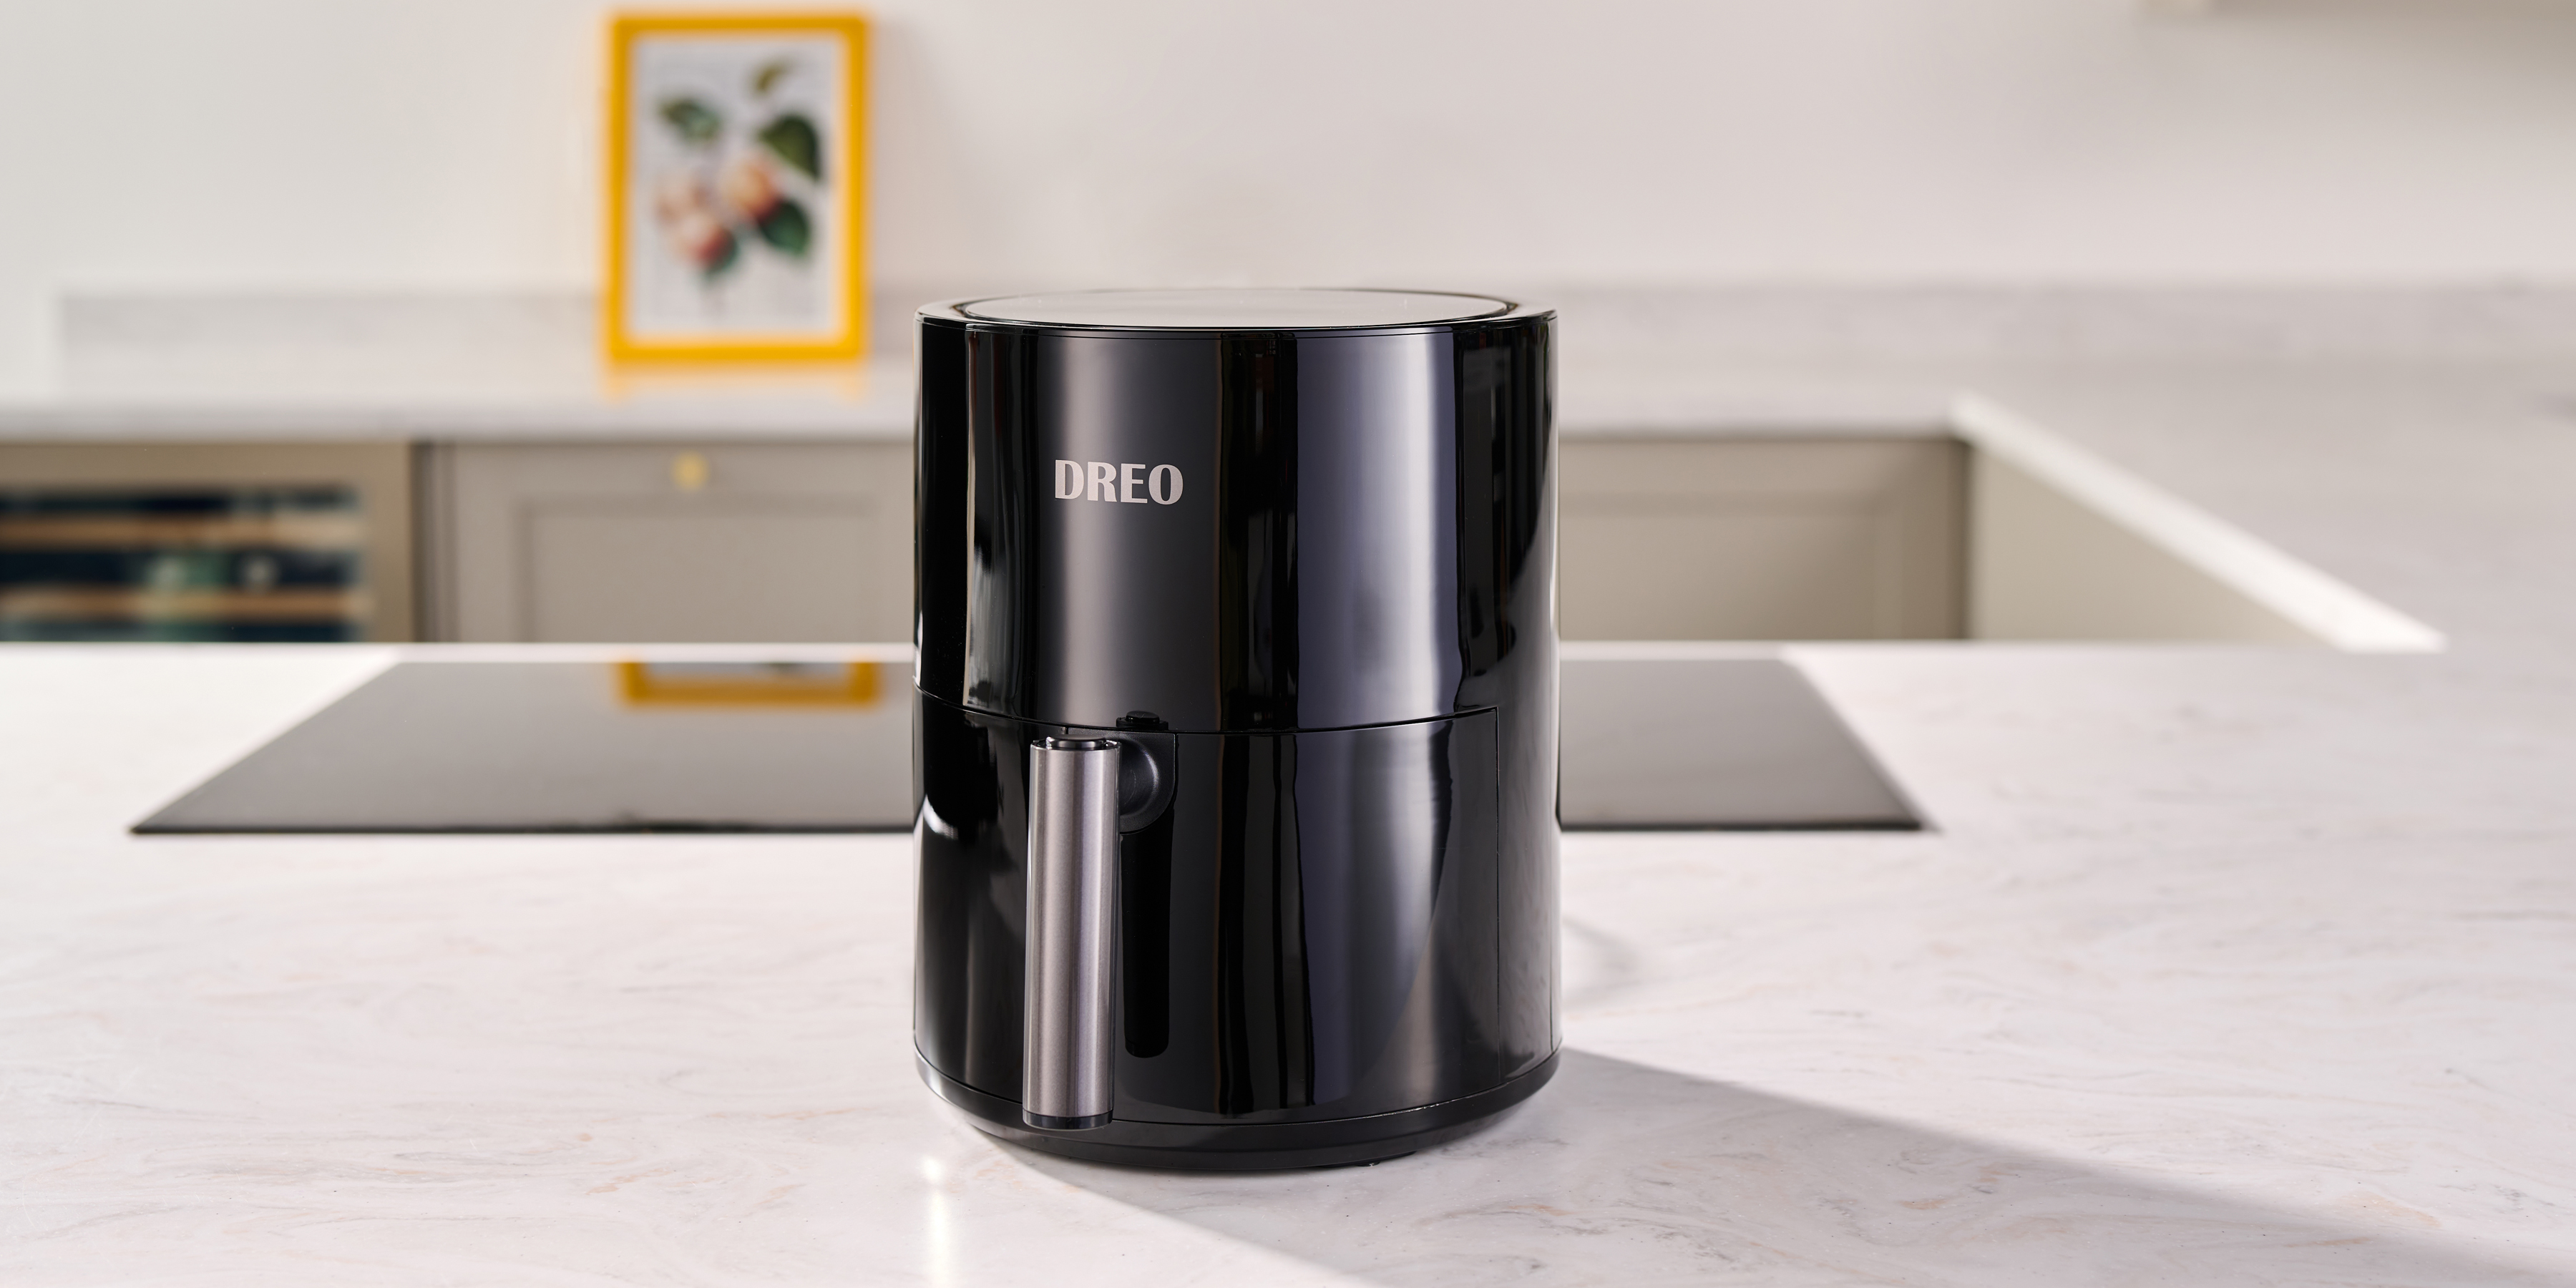 Dreo 6-Quart Air Fryer review